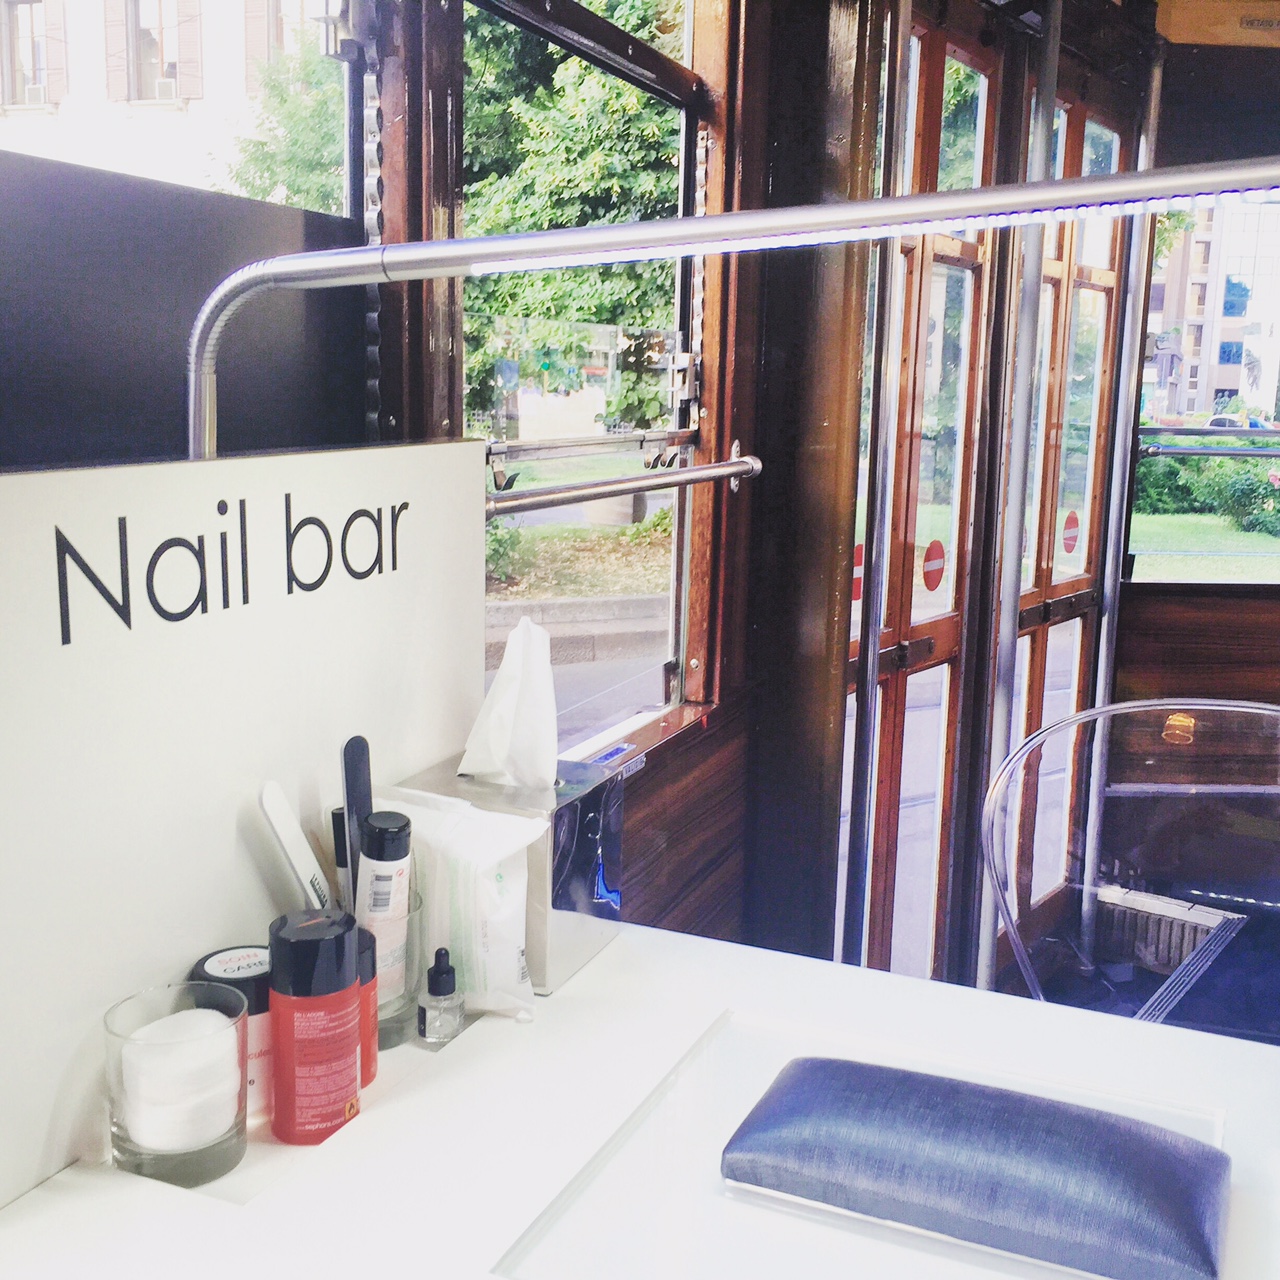 nail bar-sephora-tram-milano-luglio-2015